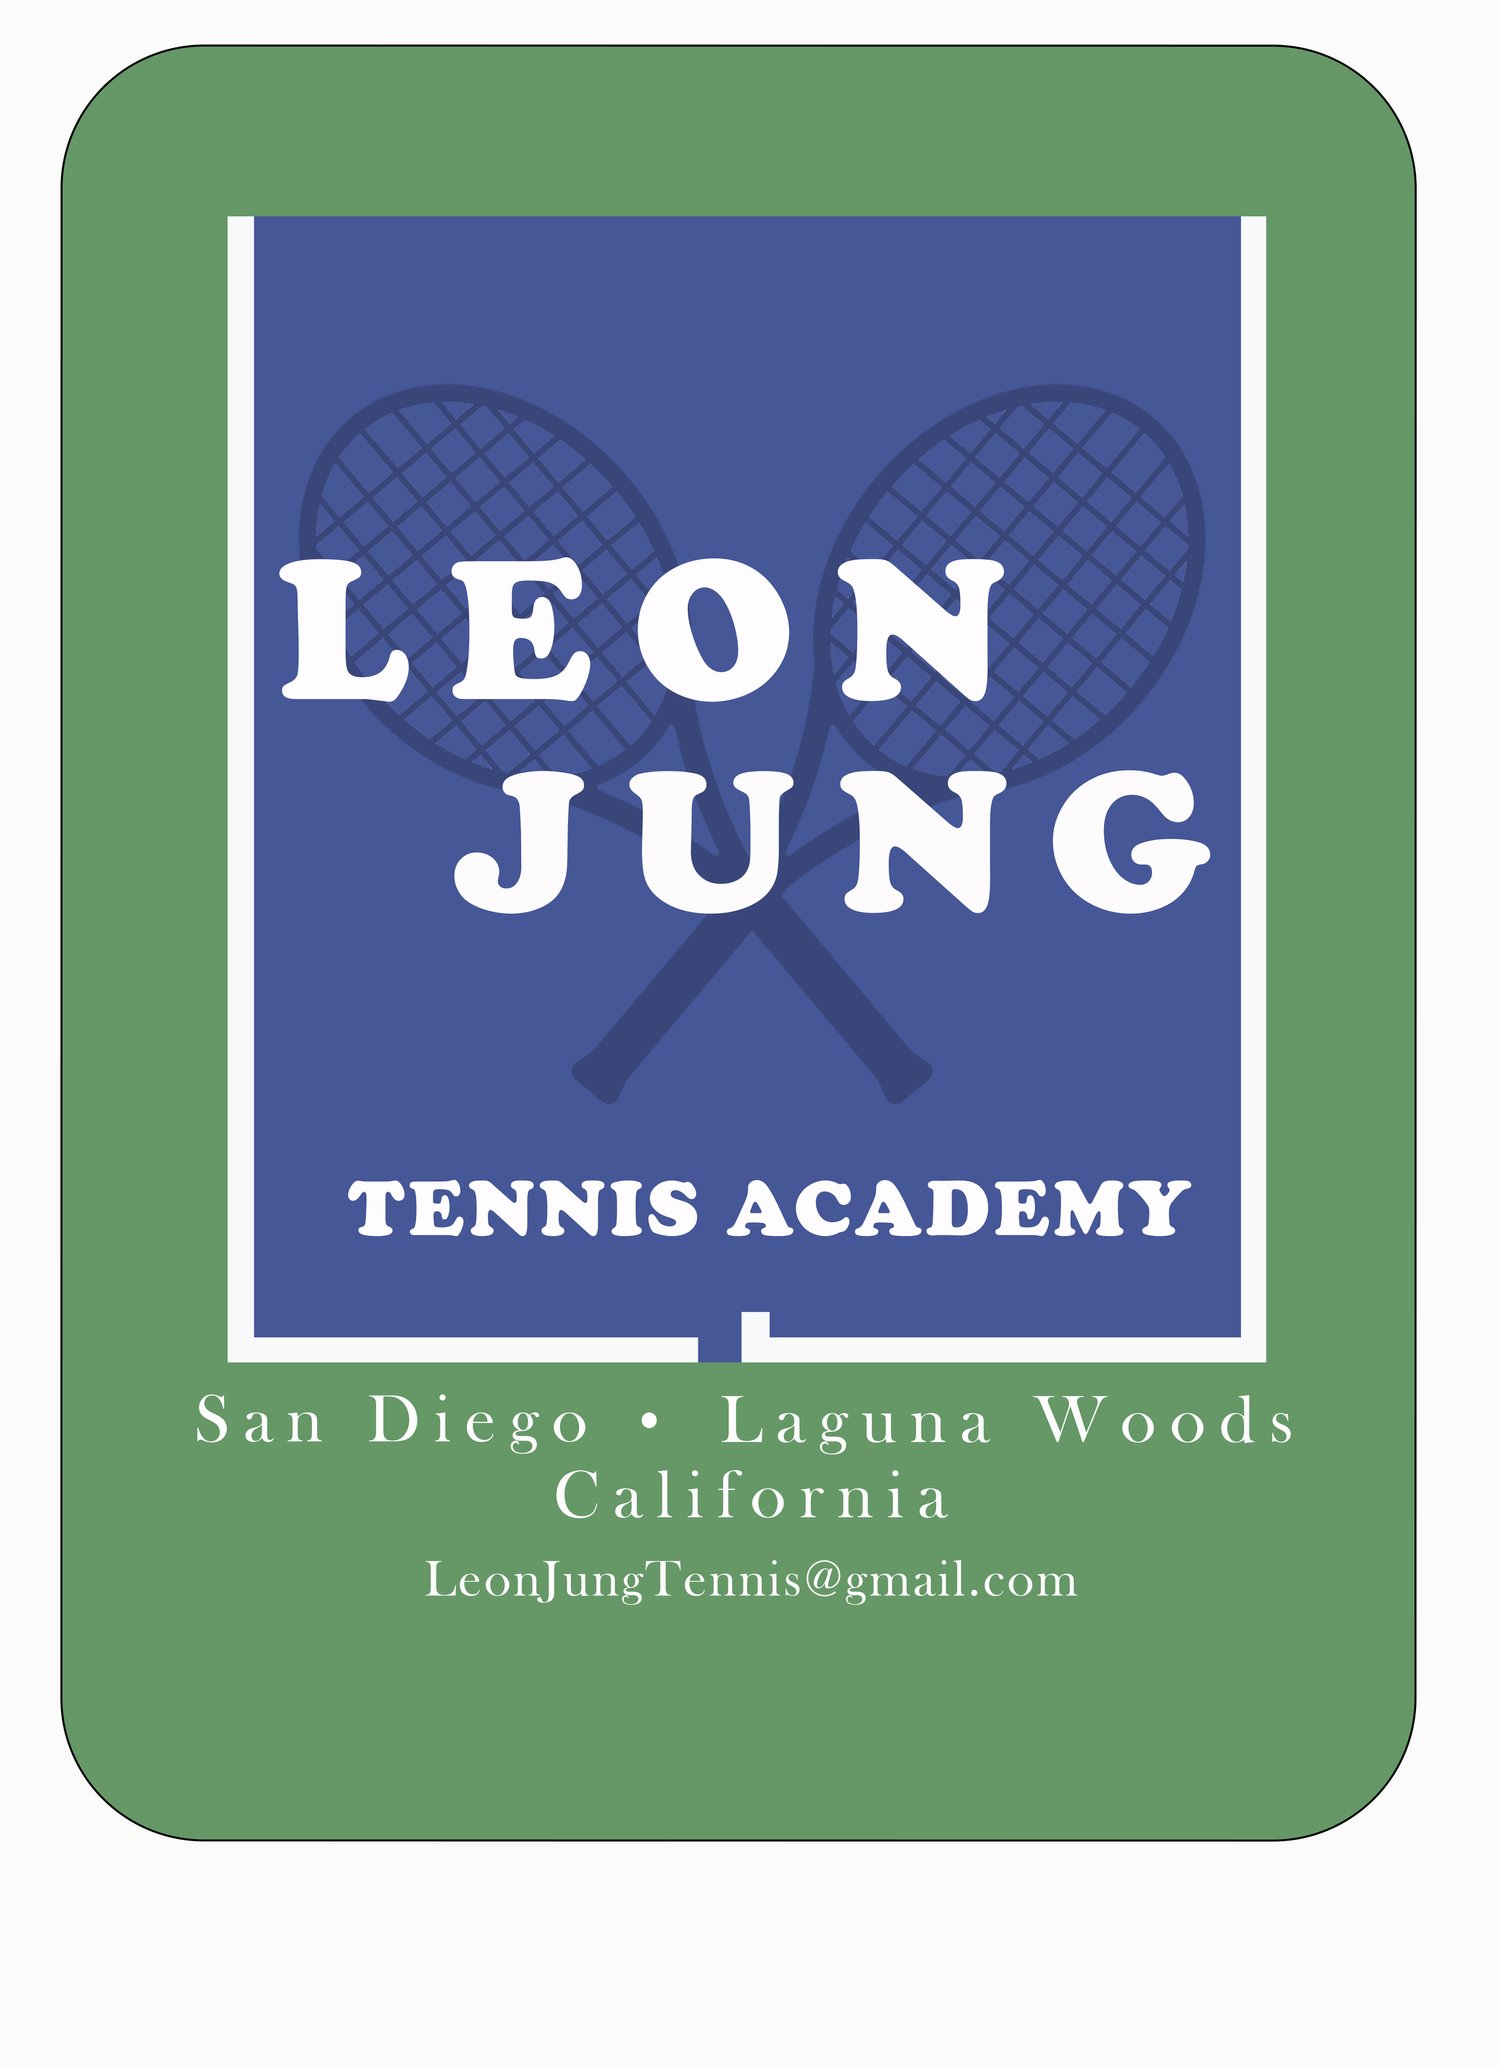 Leon-Jung Tennis